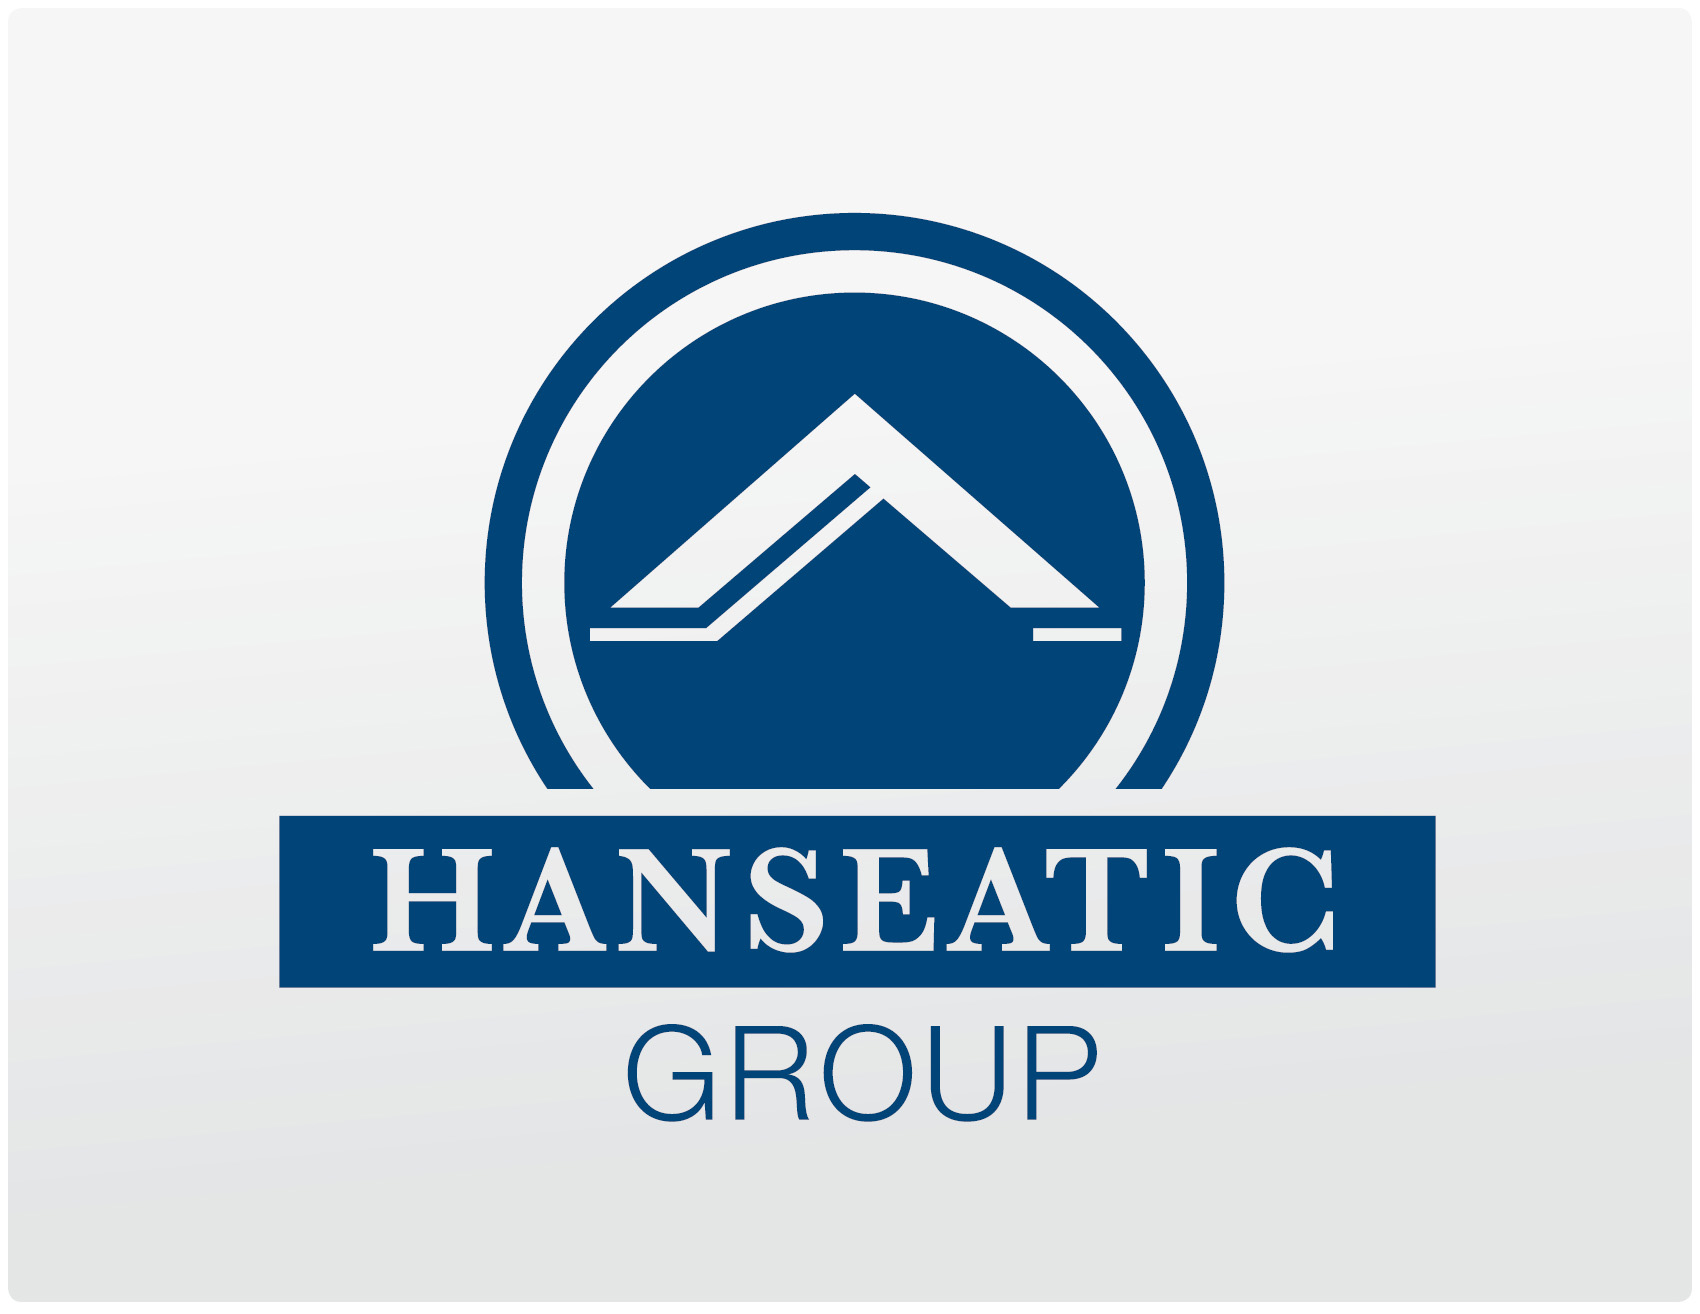 Hanseatic Group neuer Gruppensponsor